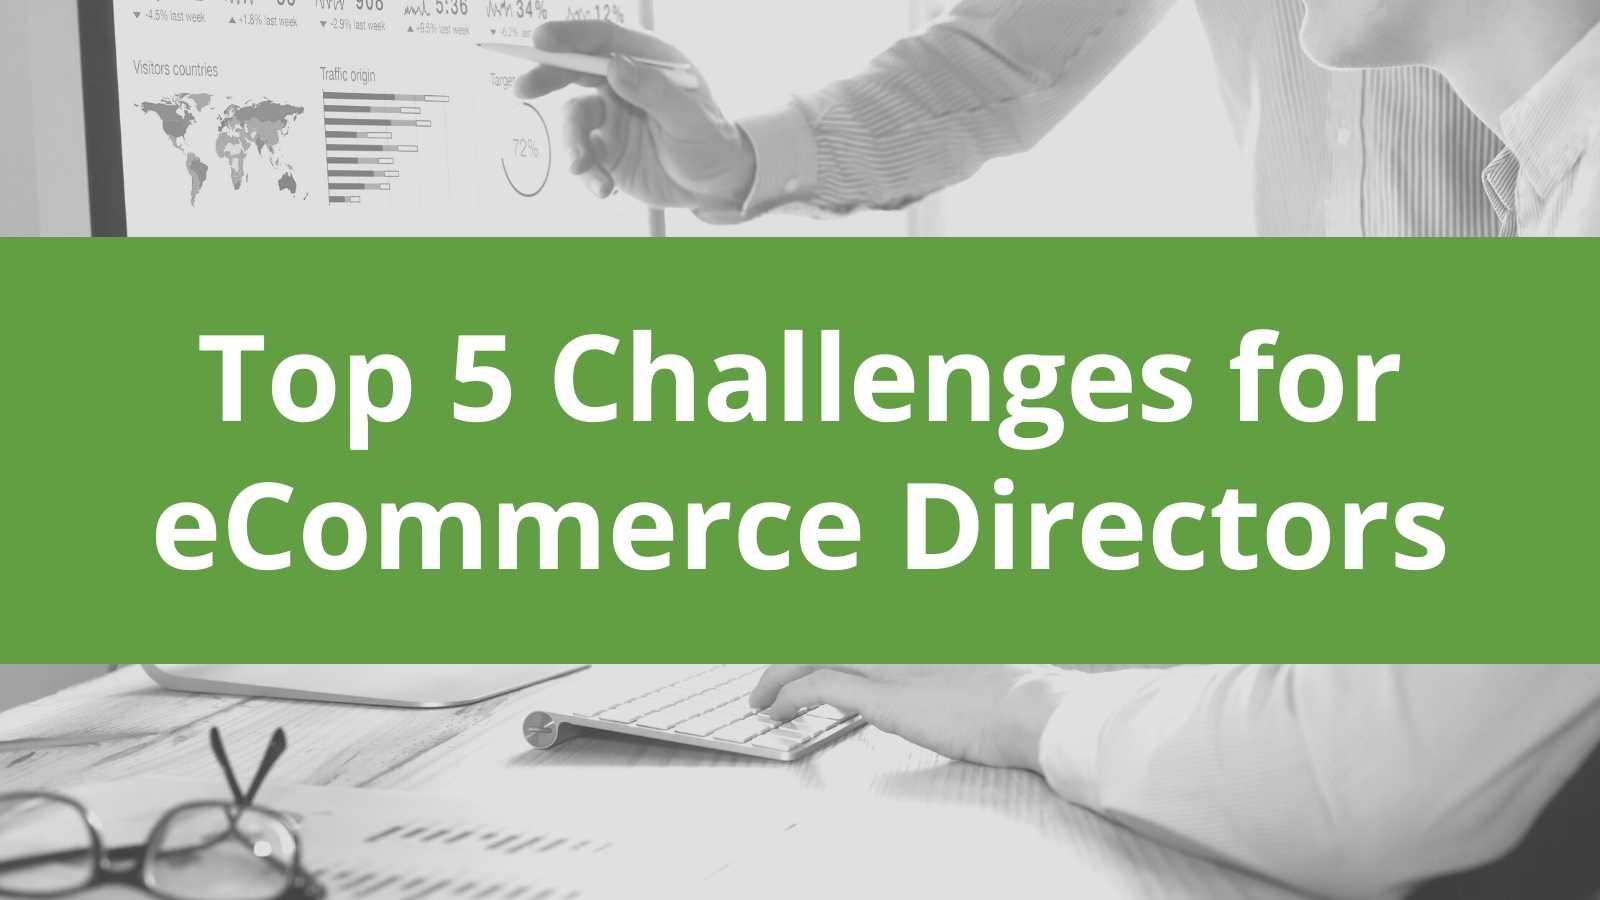 Top 5 Challenges for Ecommerce Directors